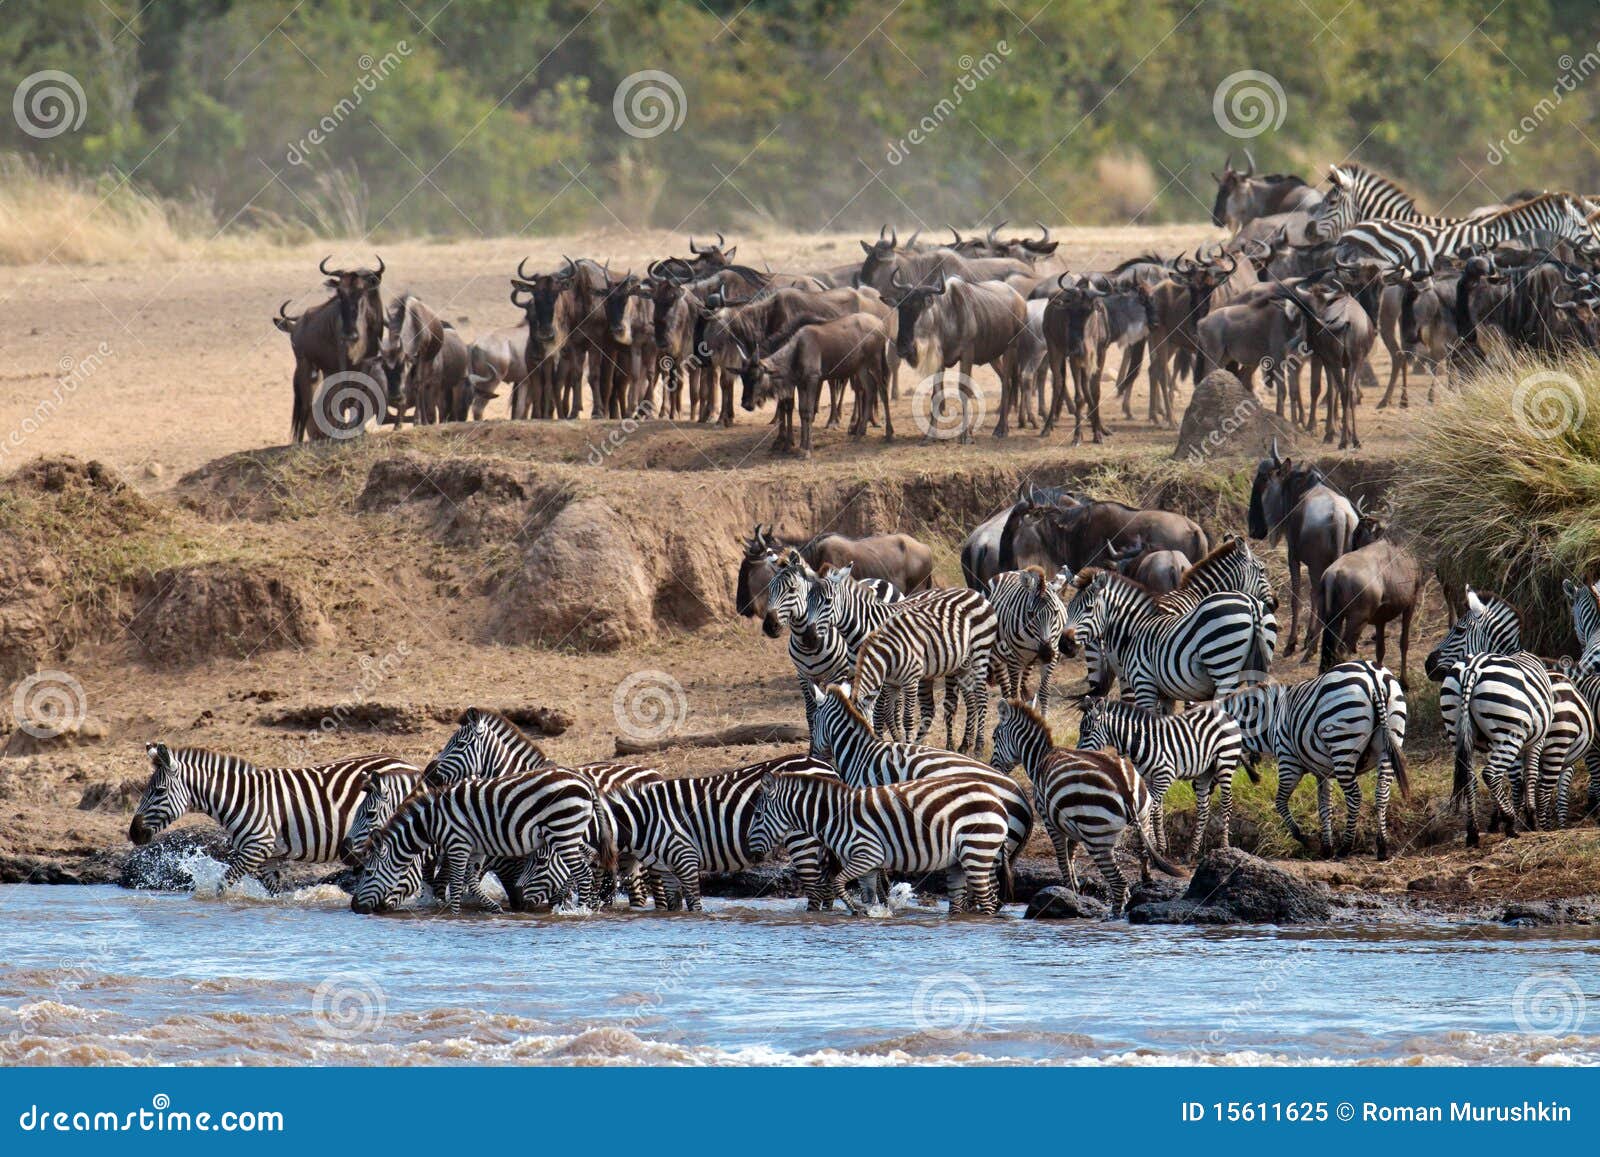 wildebeest and zebras crossing the river mara